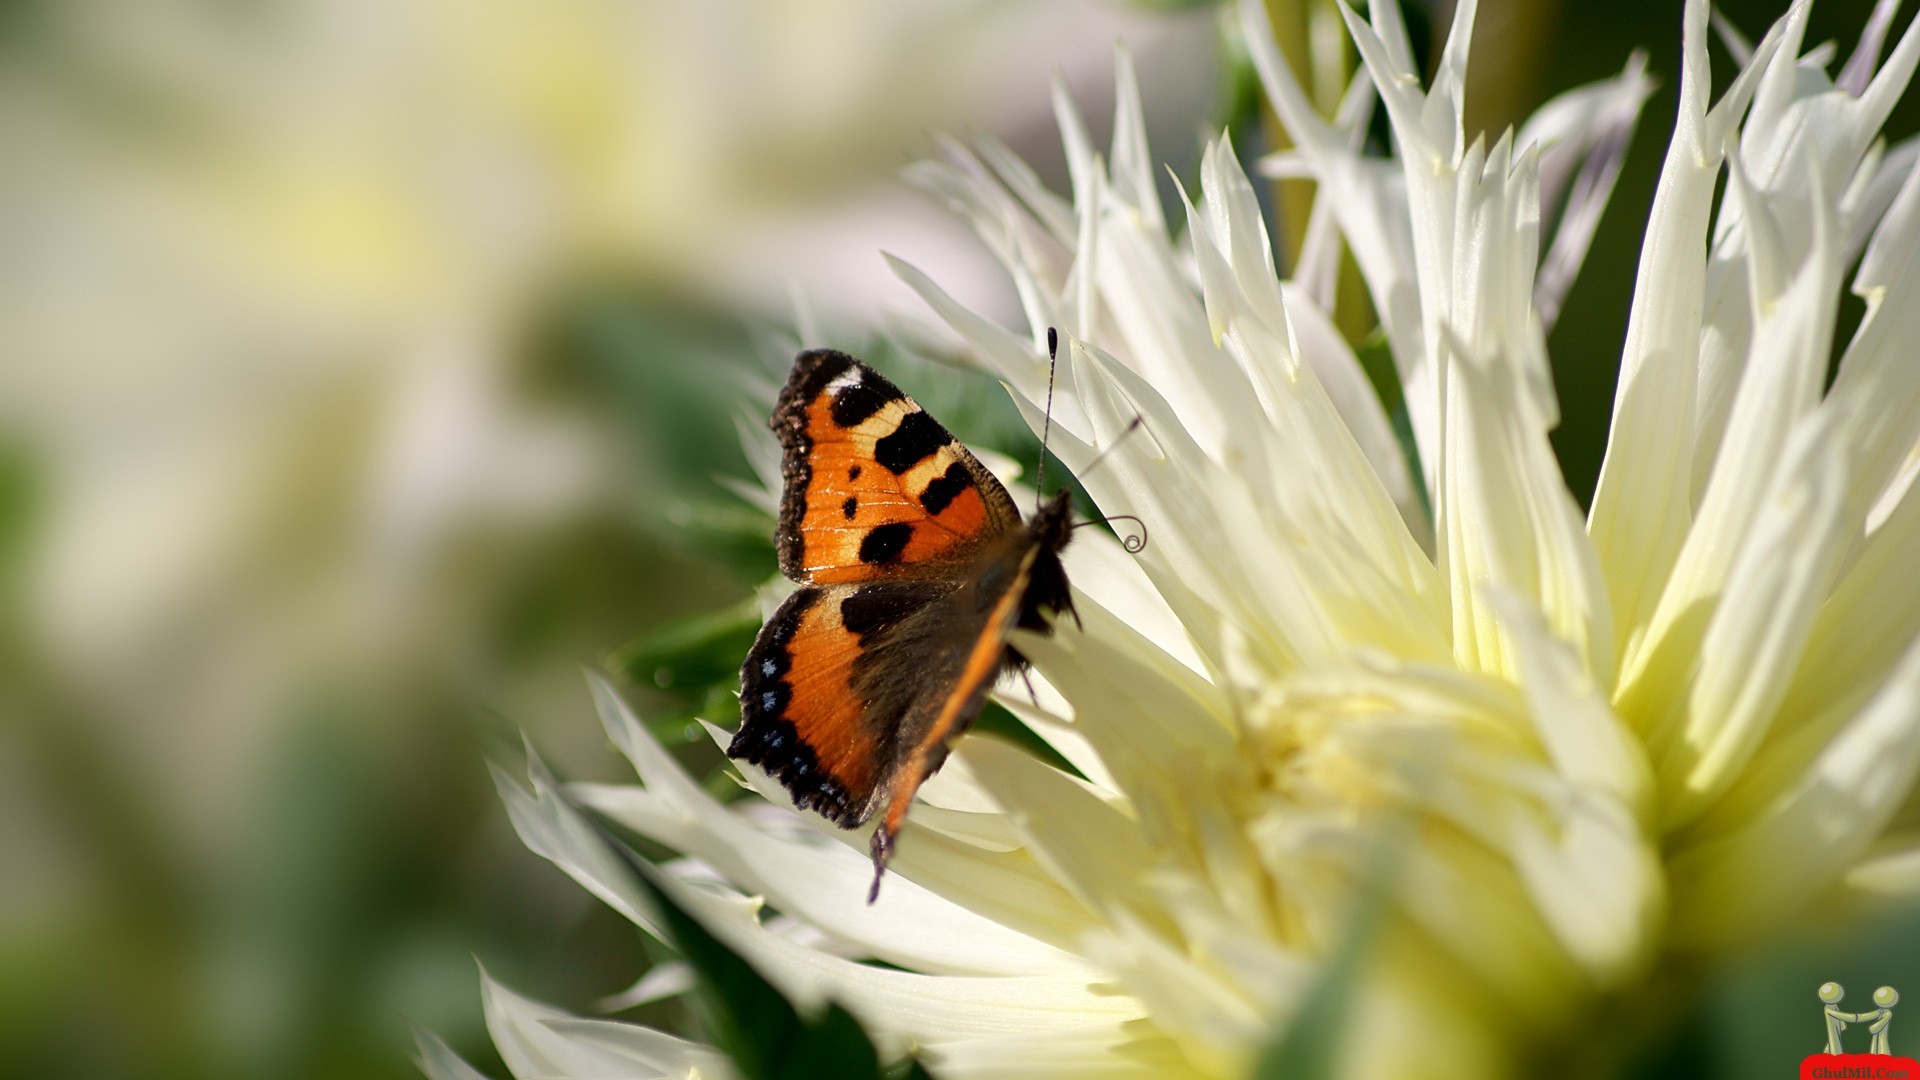 Beautiful Butterflies and Flowers Wallpapers – WallpaperSafari